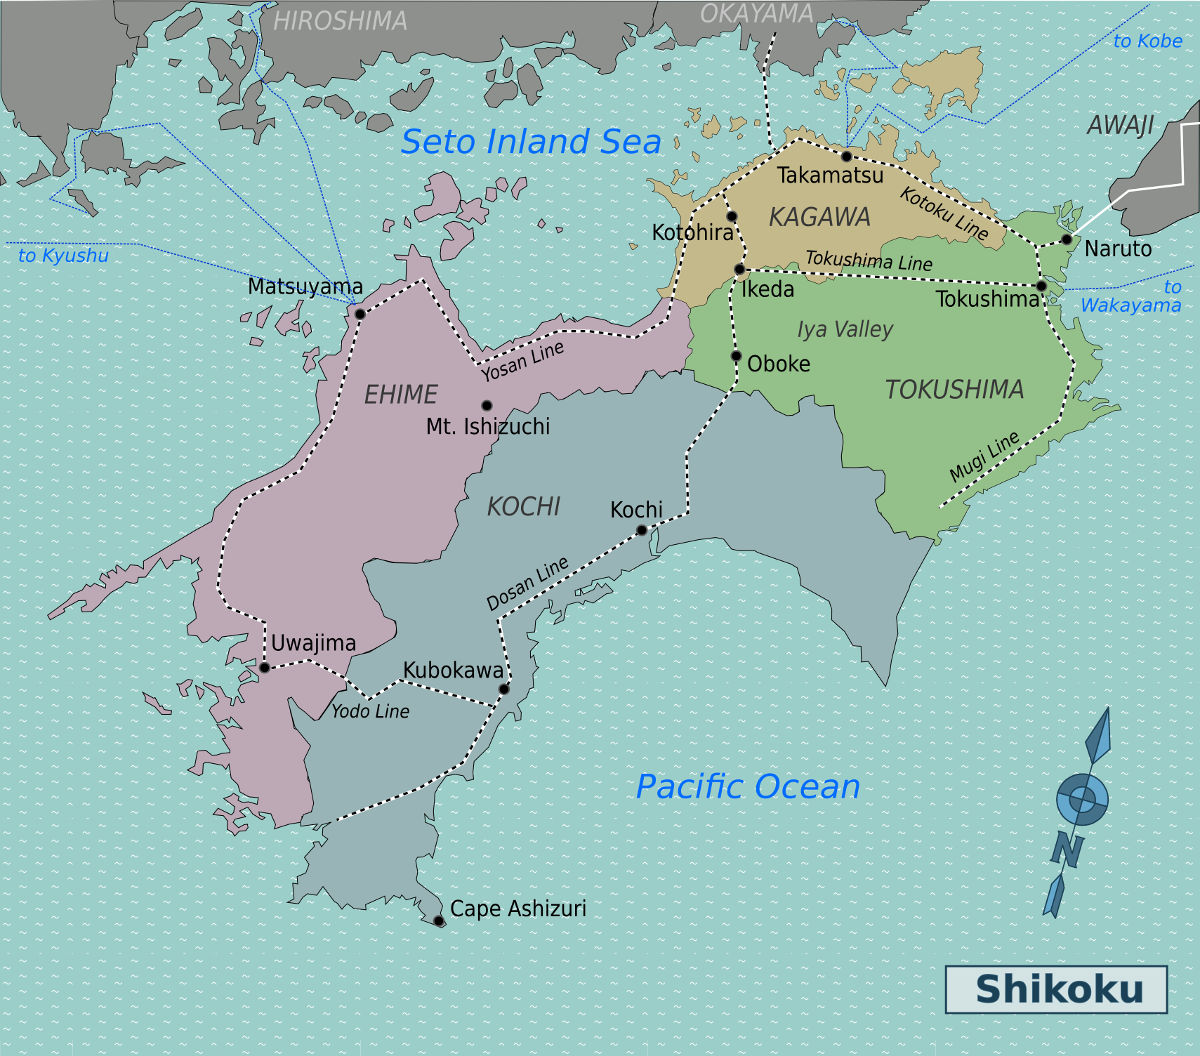 Shikoku region